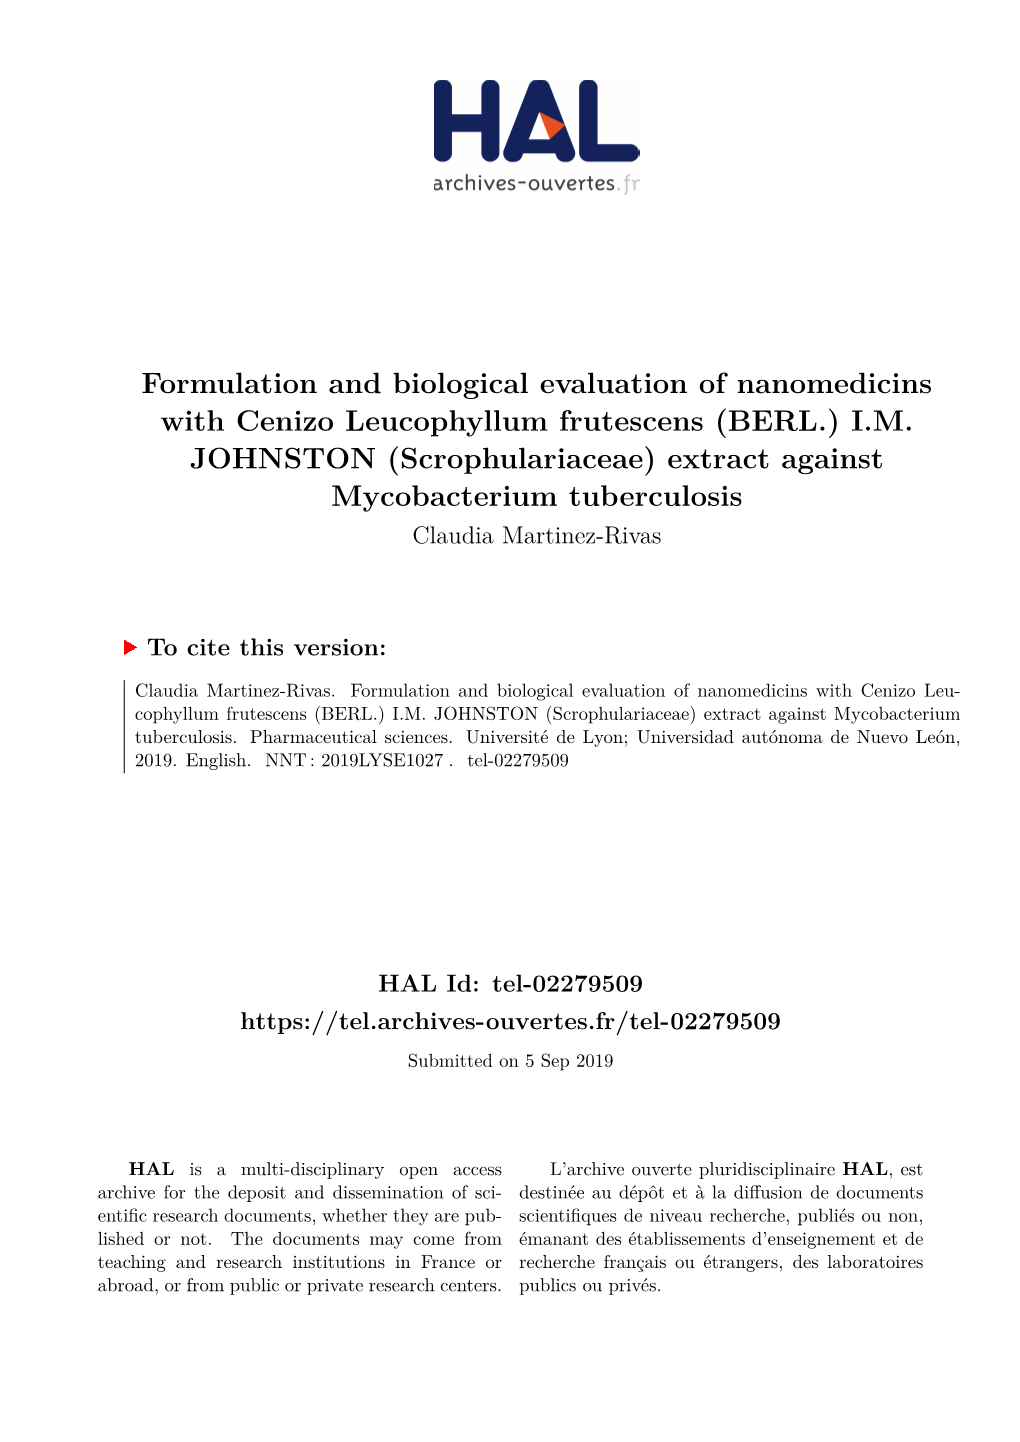 Formulation and Biological Evaluation of Nanomedicins with Cenizo Leucophyllum Frutescens (BERL.) I.M